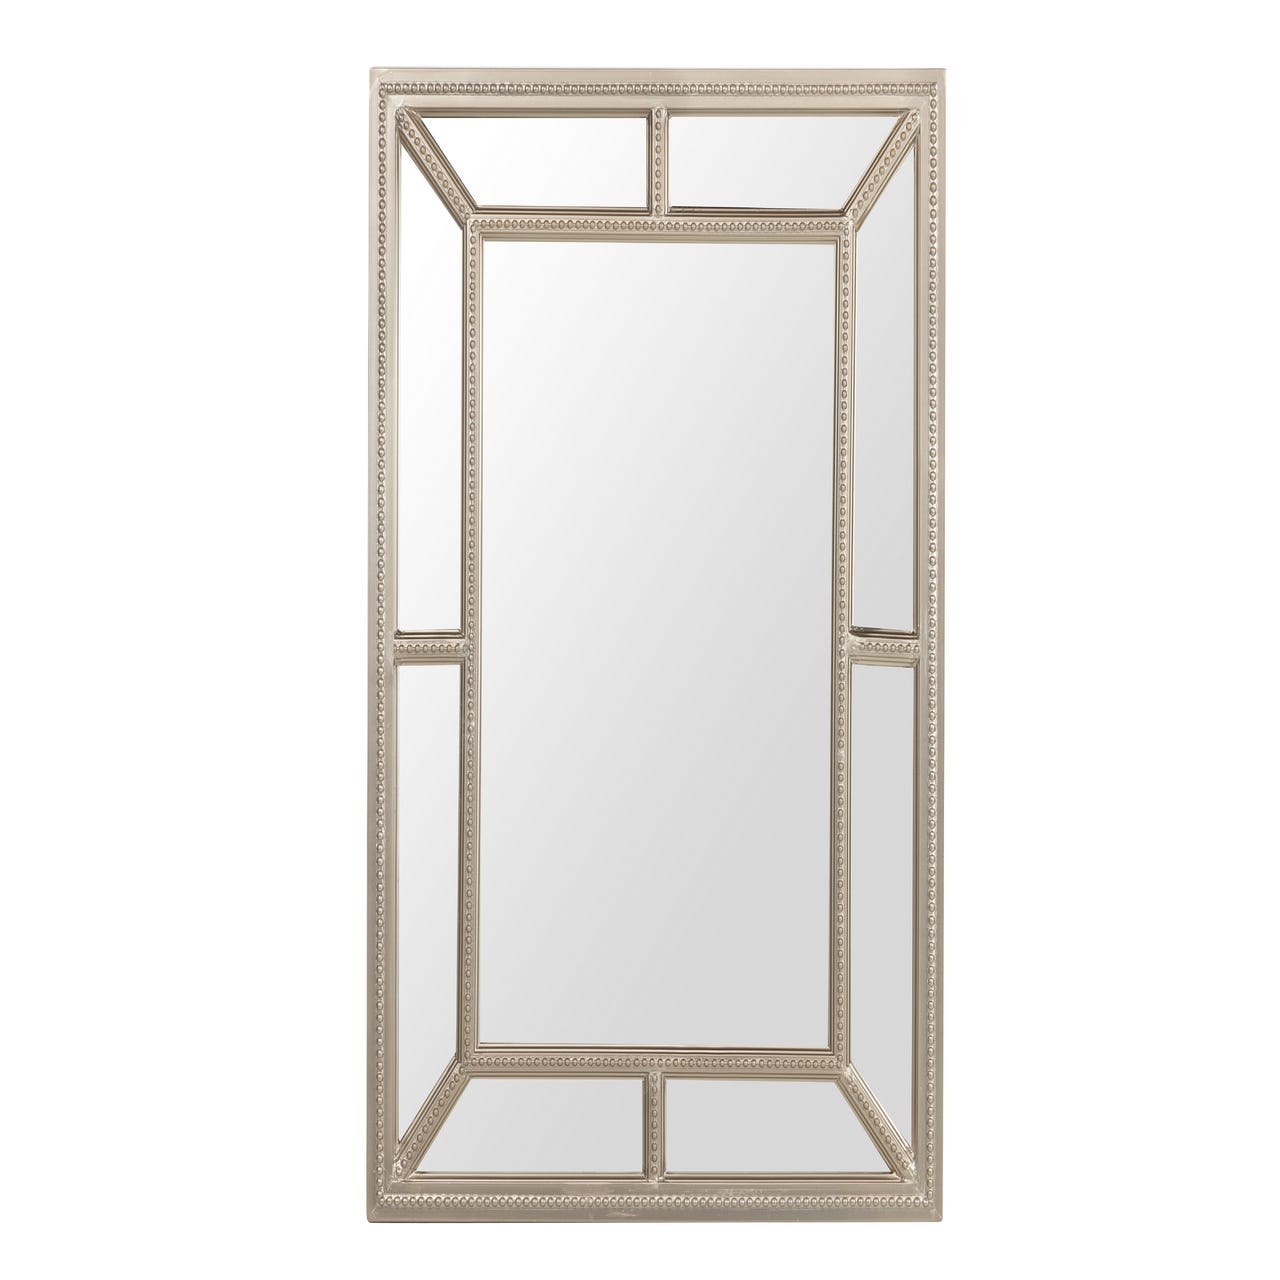 Espejo cuadrado con cuatro paneles - Metal Blanco